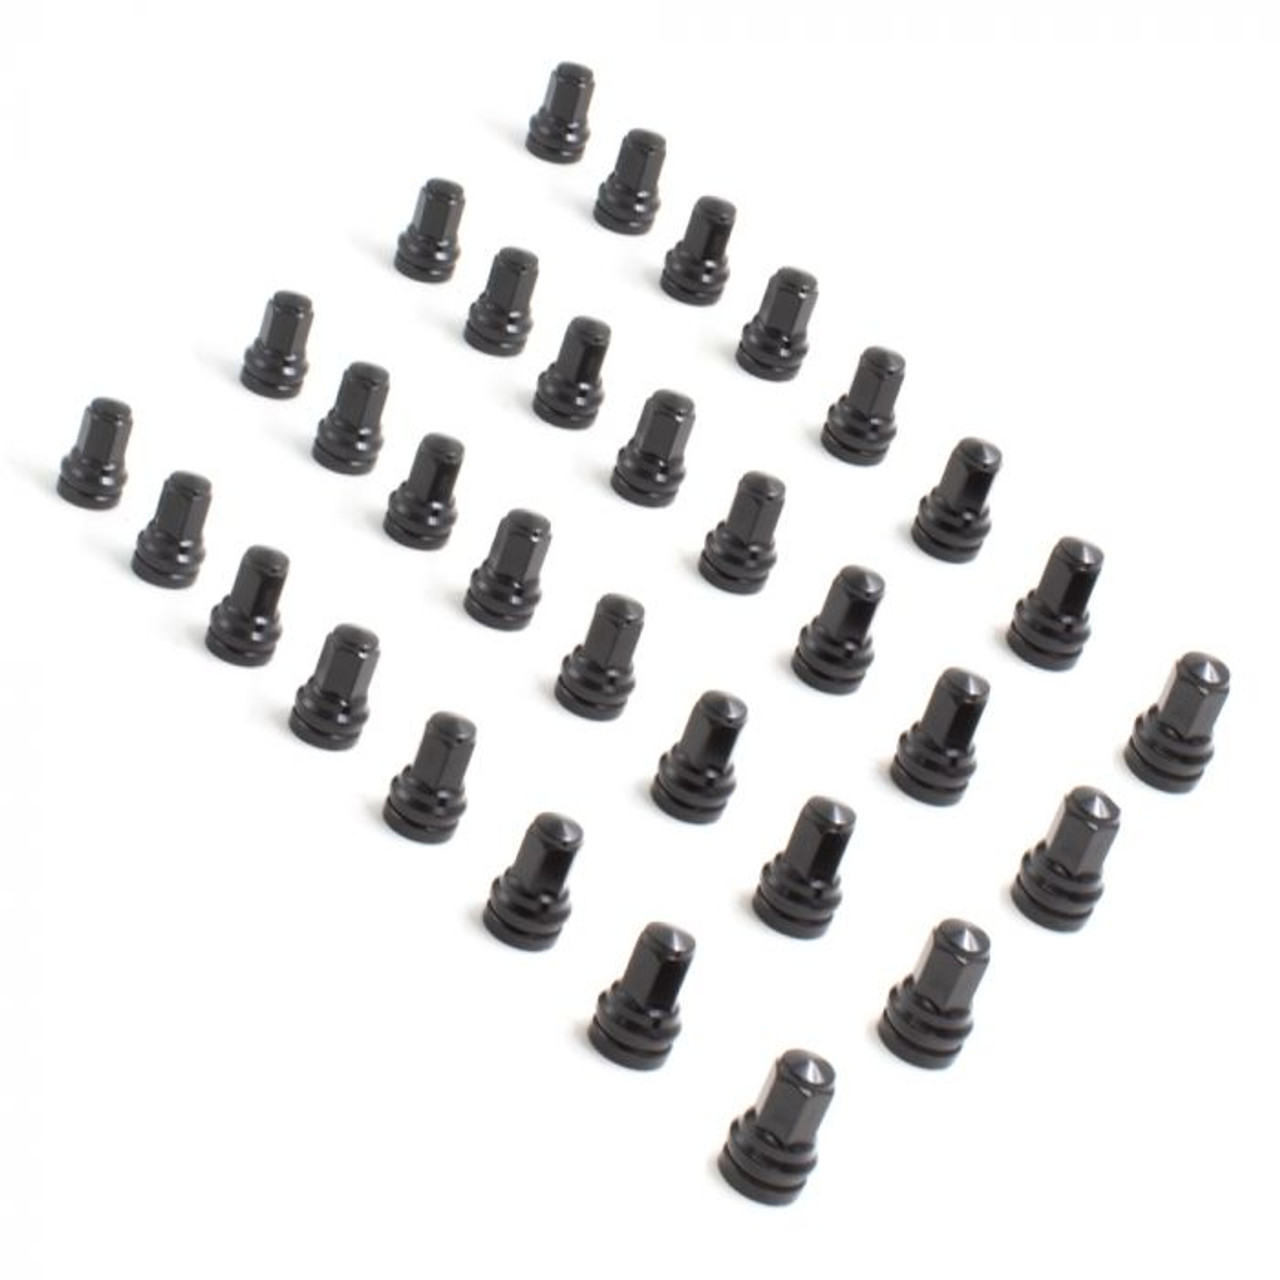 32 Pieces Stock OEM Factory Style Lug Nuts - Install Kit (Black) - Ford (13/16) M14 1.5 (8 Lug Kit)